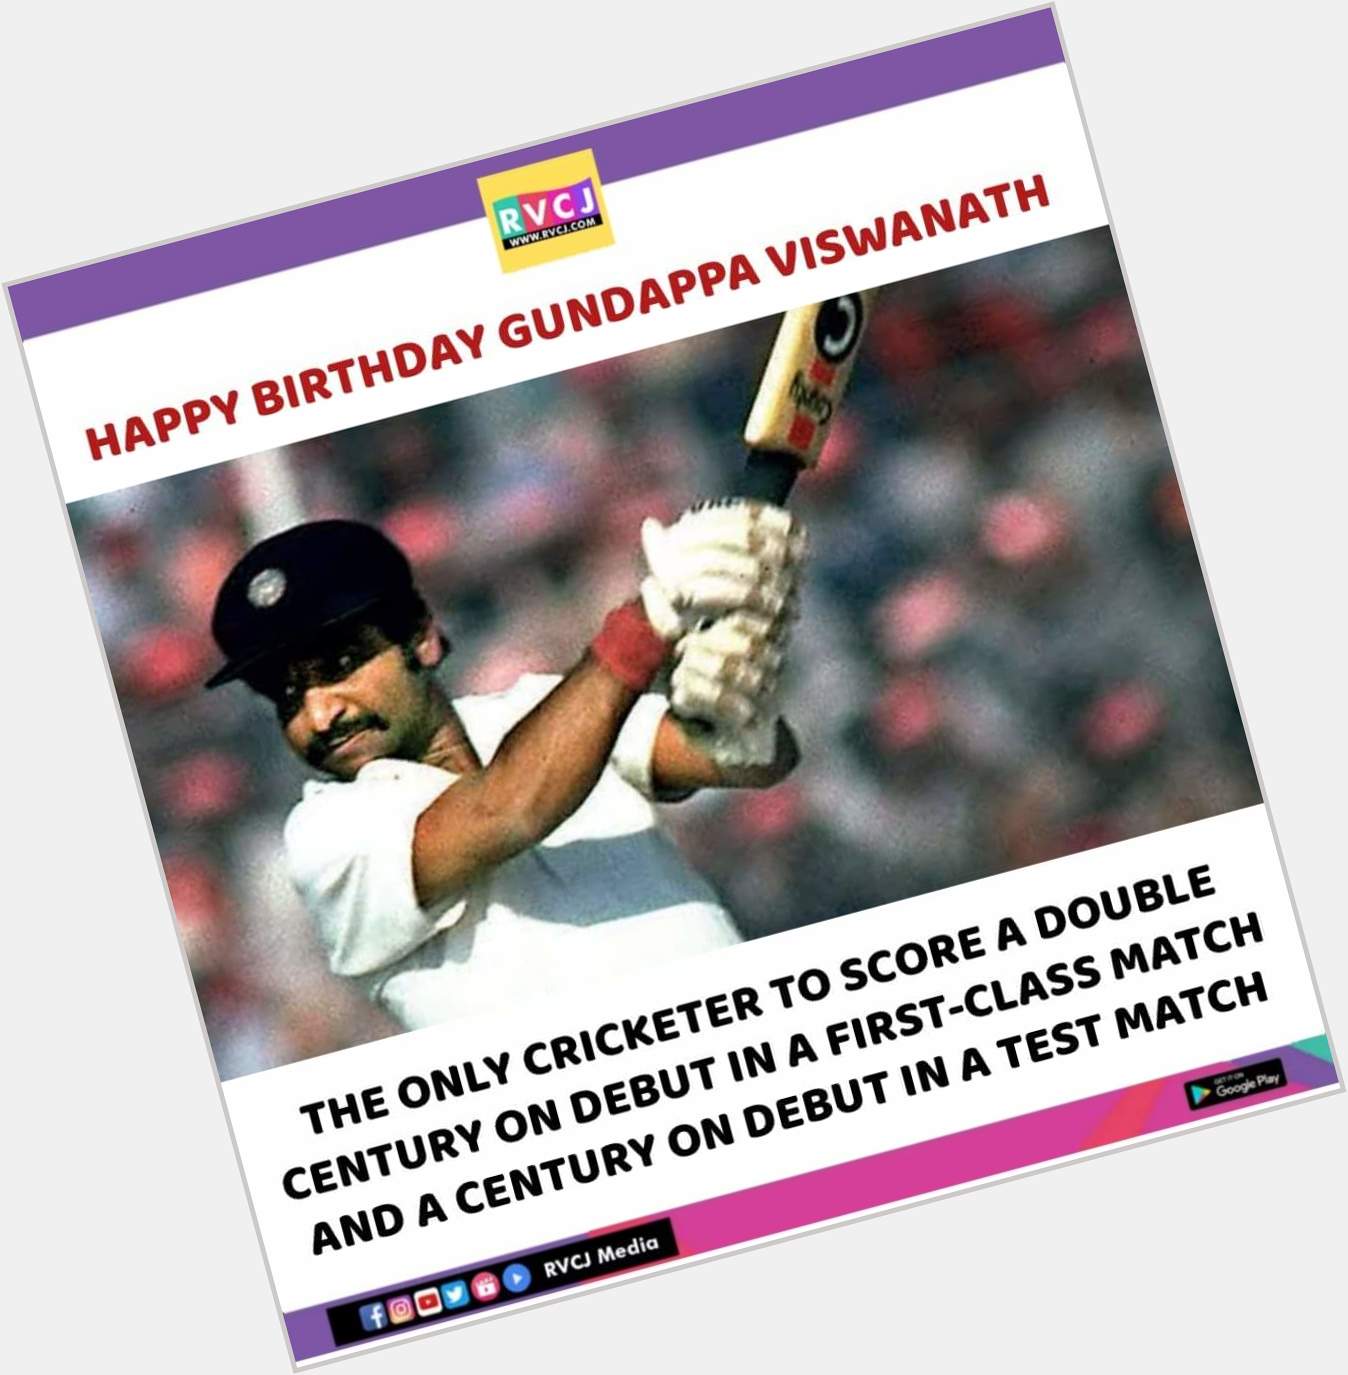 Happy Birthday Gundappa Viswanath! 